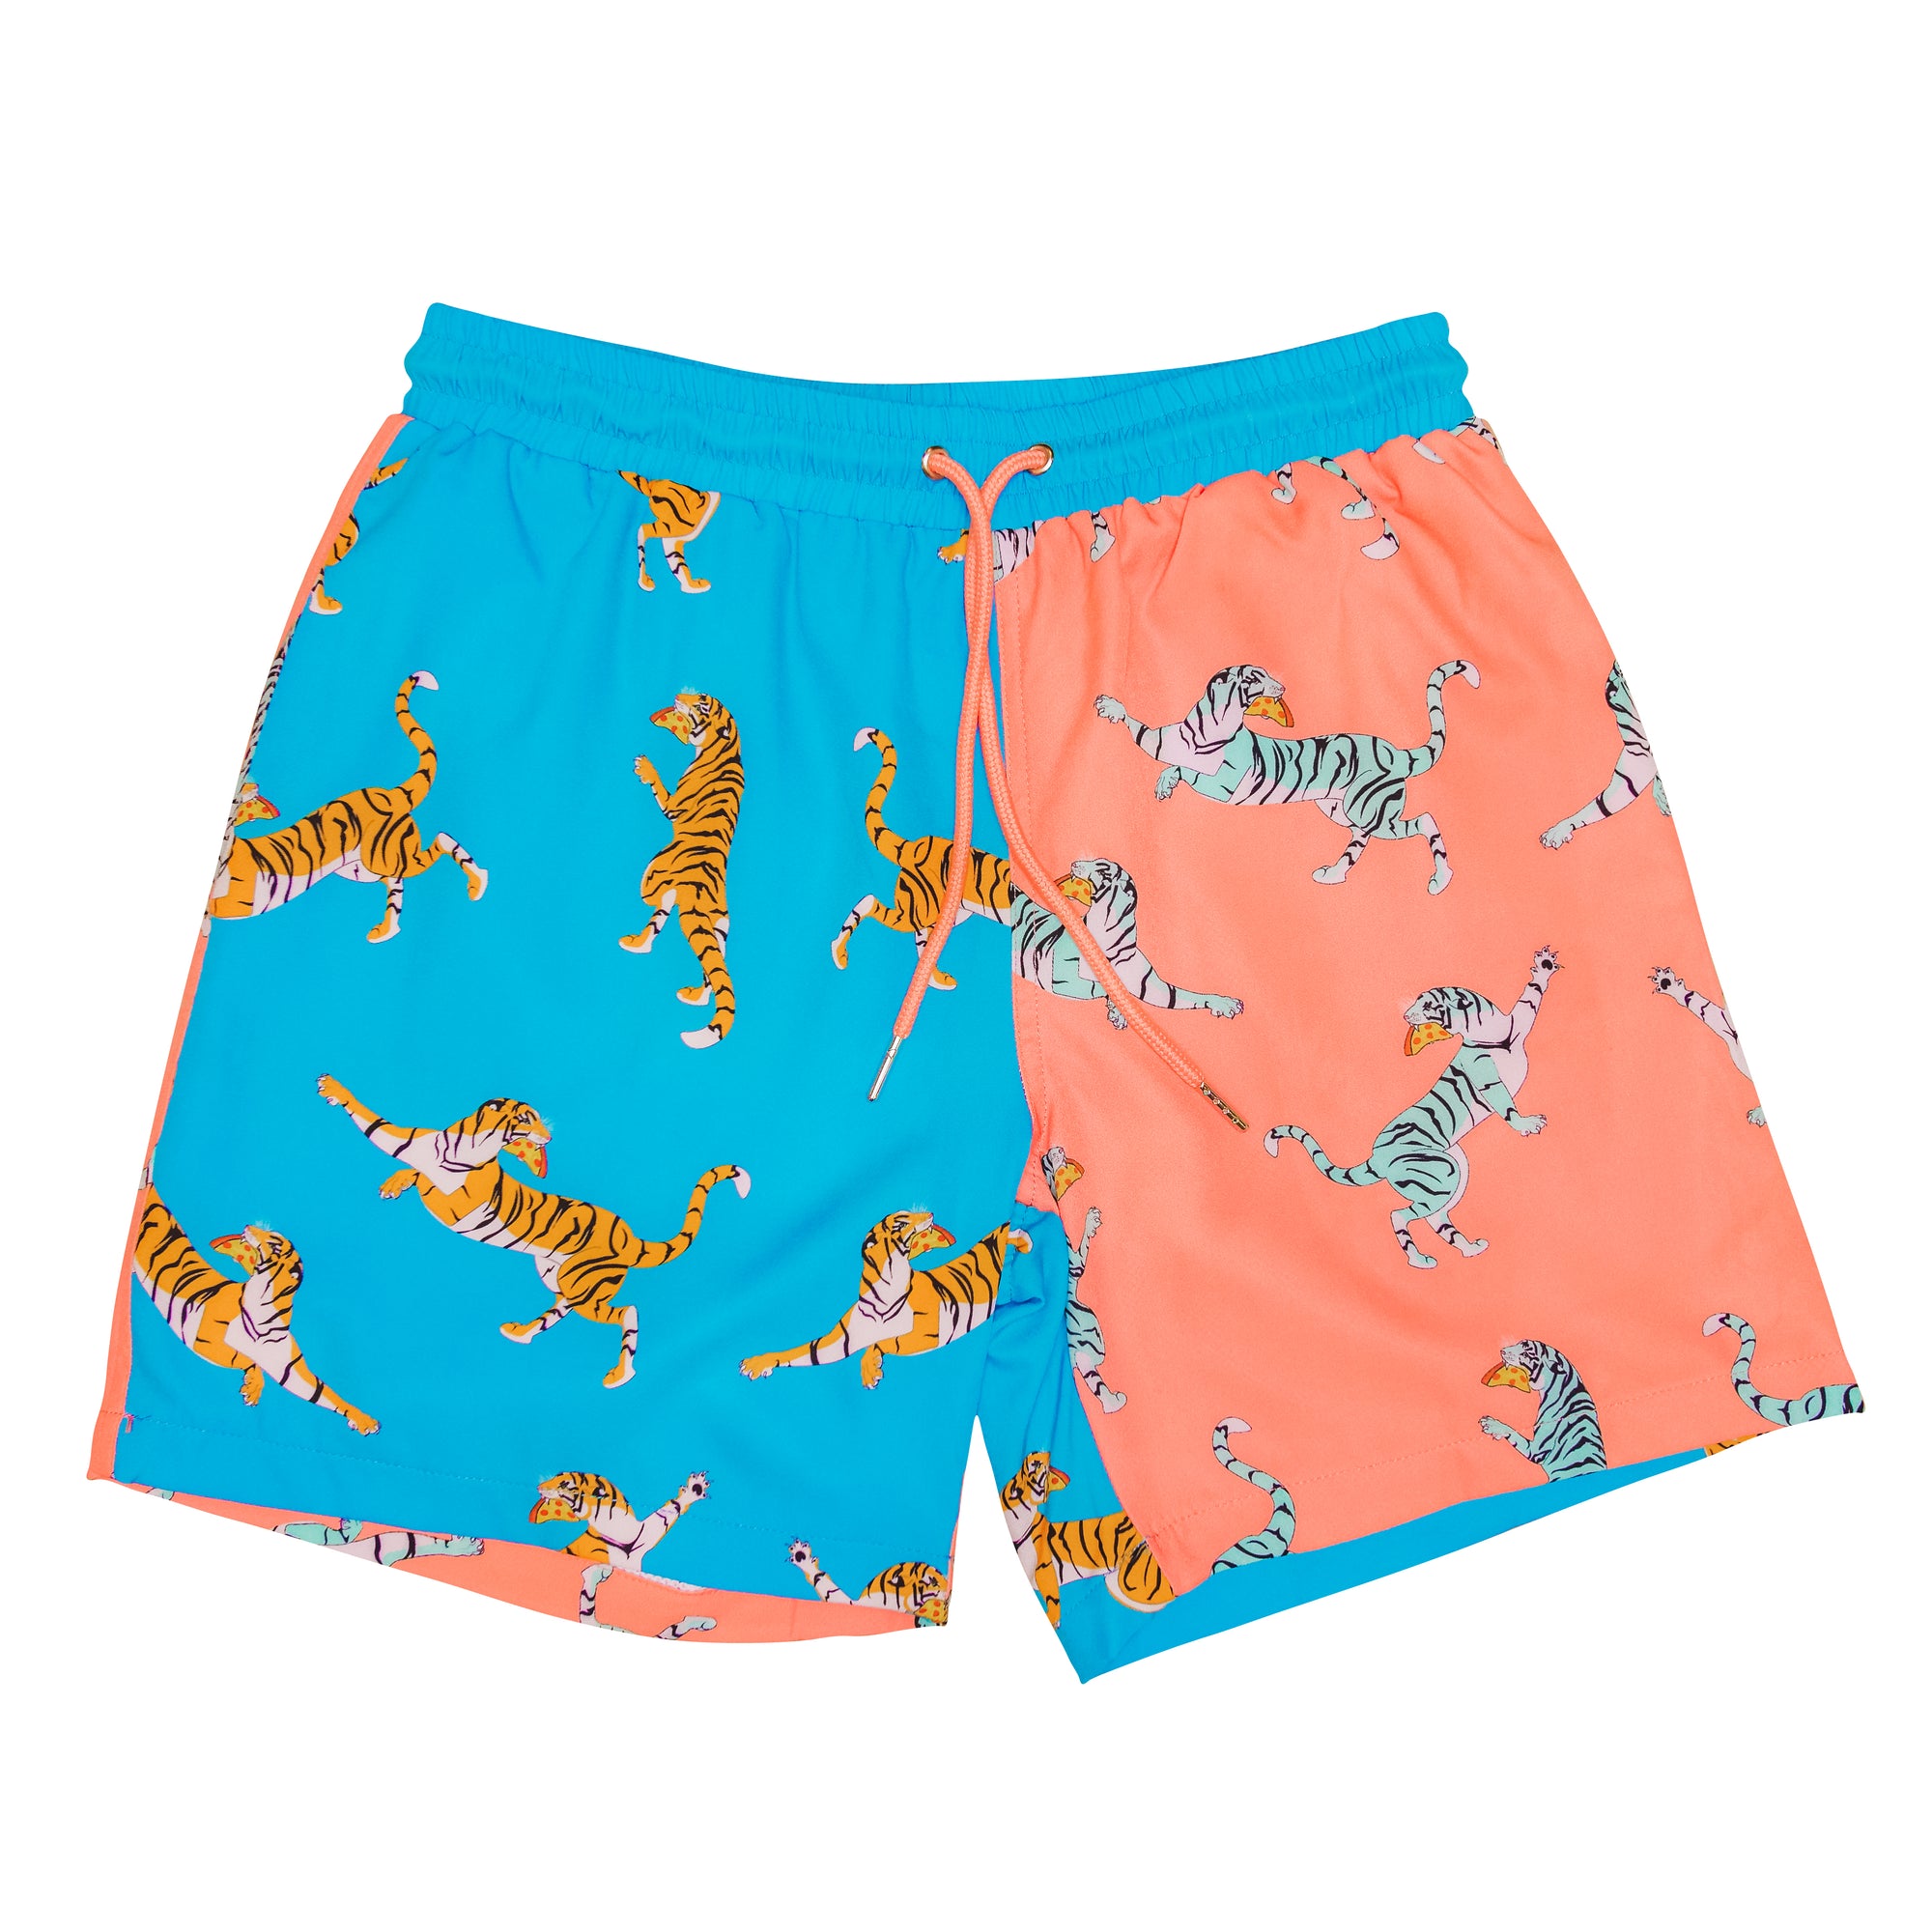 Pizza Tiger Retro Vintage Shorts Swim Trunks. Orange blue teal split pizza tiger design retro nostalgic beach swimwear. B fresh Gear